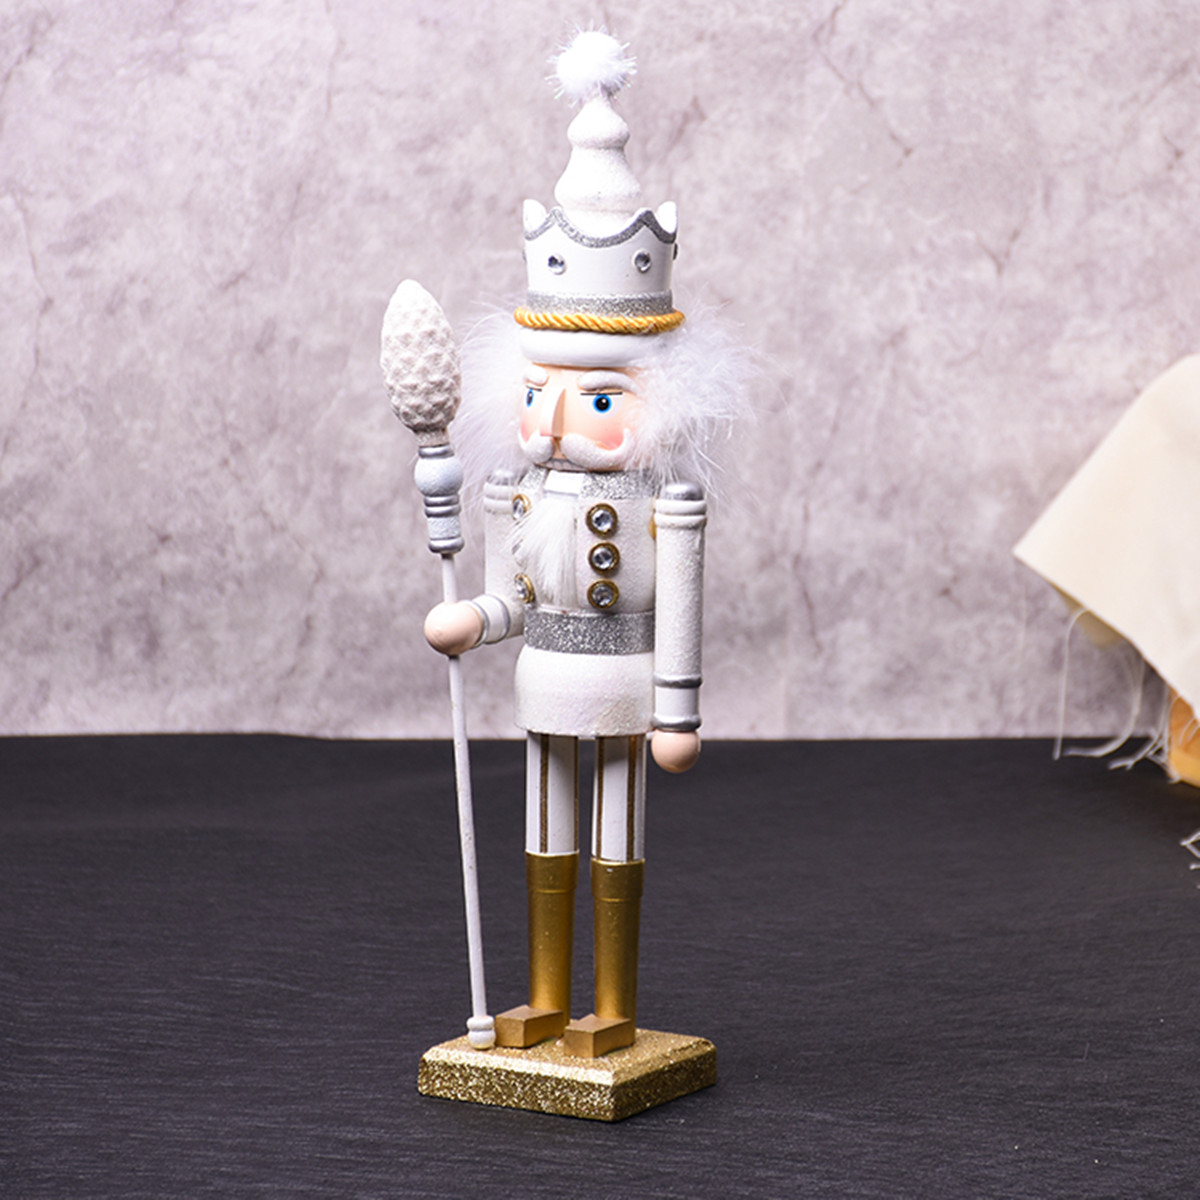 42cm-Wooden-Nutcracker-Doll-Soldier-Vintage-Handcraft-Decoration-Christmas-Action-Figure-Gifts-1386592-8